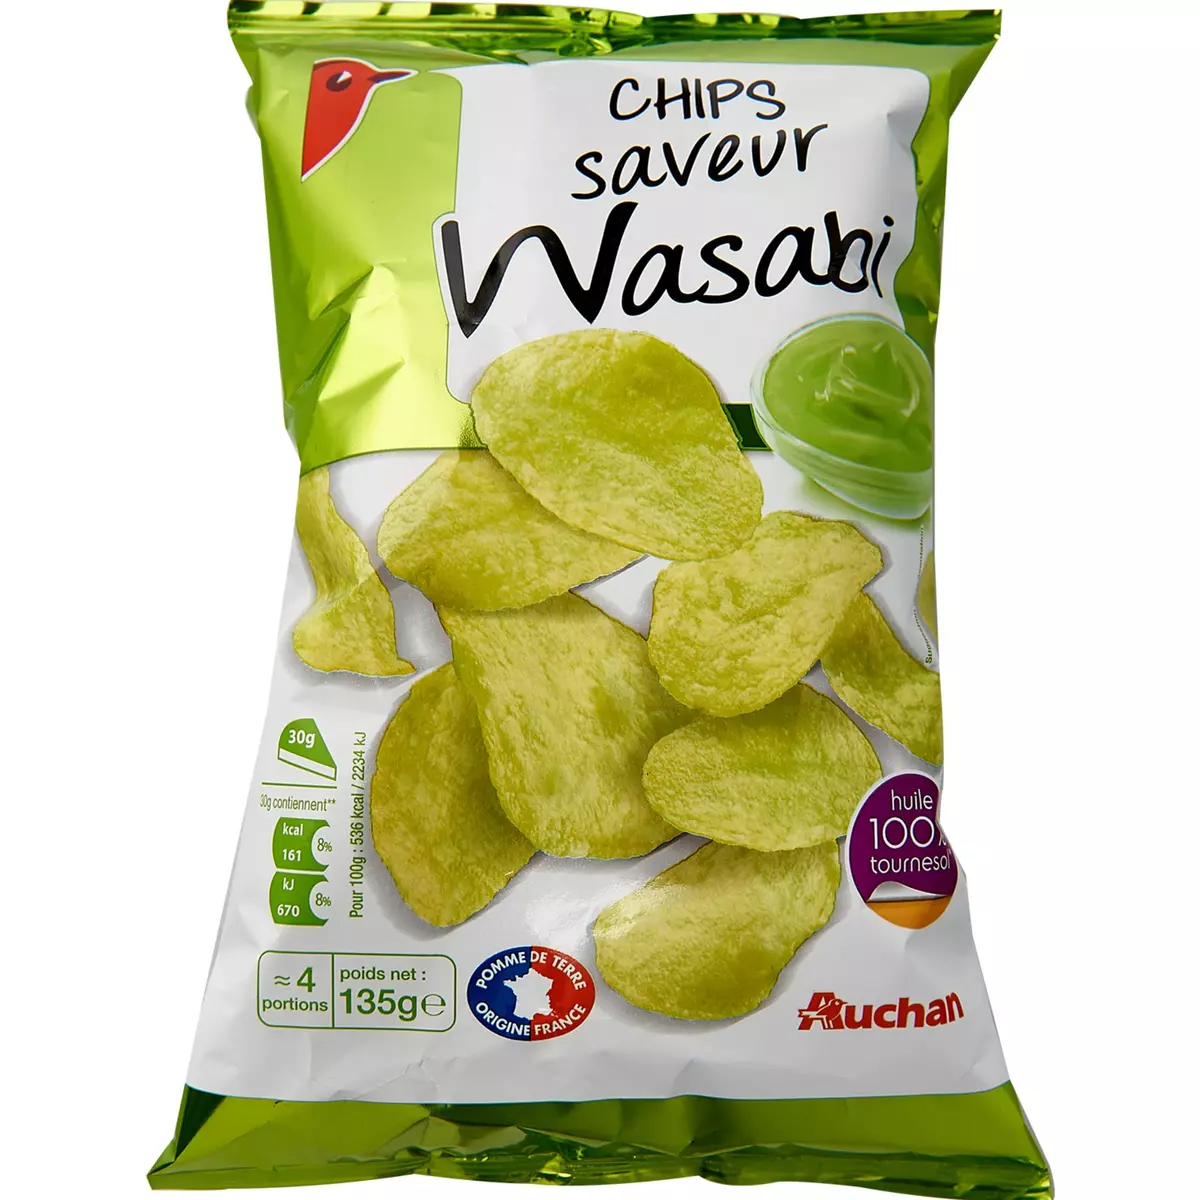 AUCHAN Chips saveur wasabi 135g